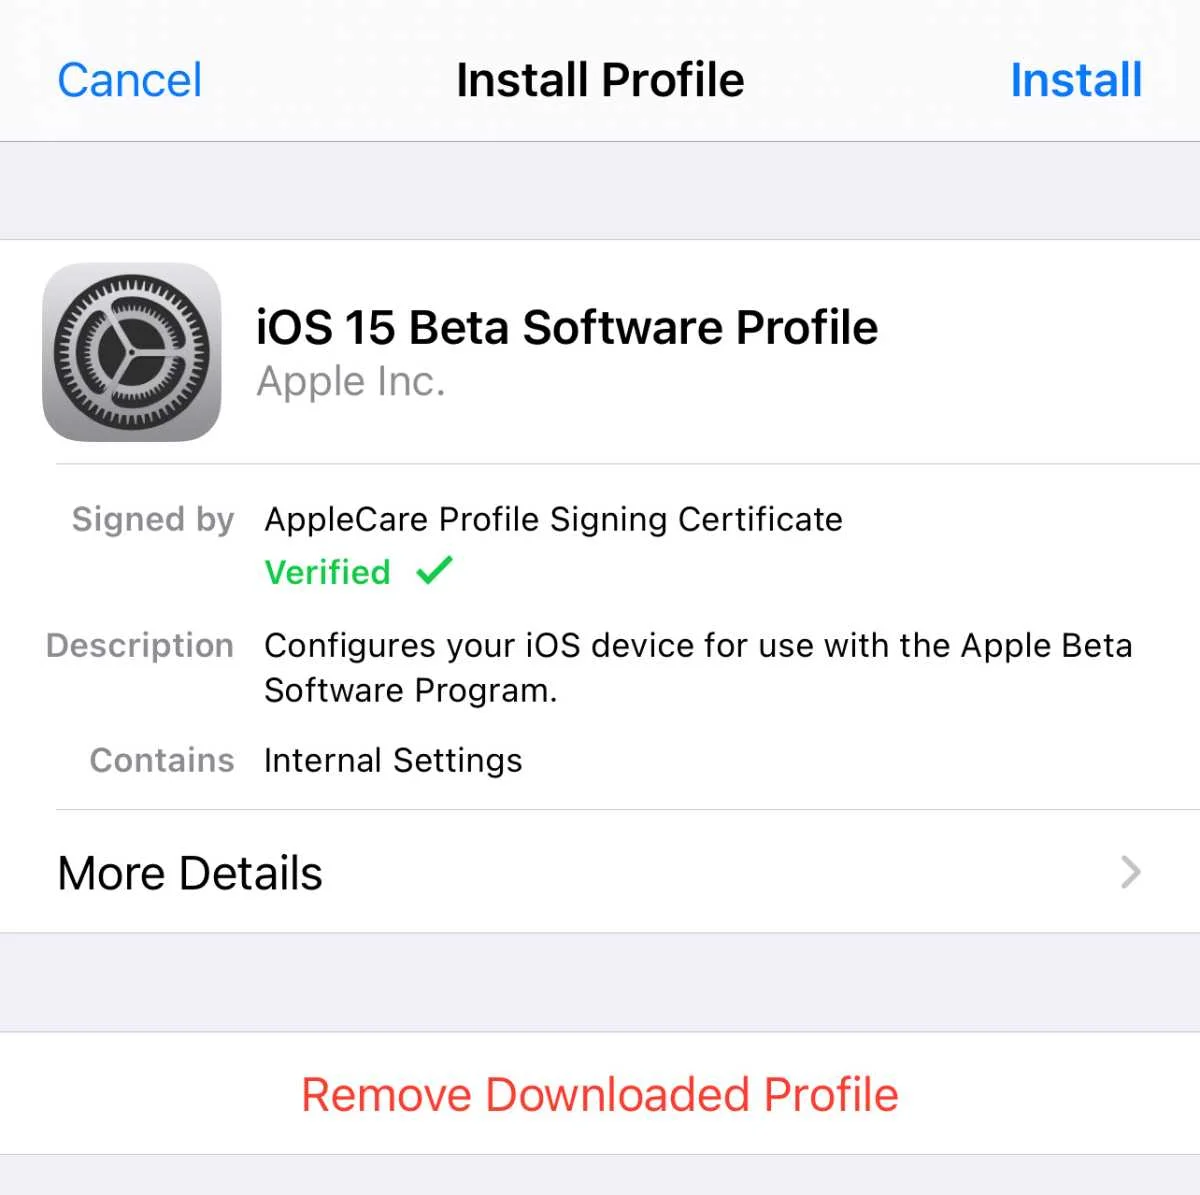 How to Install iOS 15 Beta